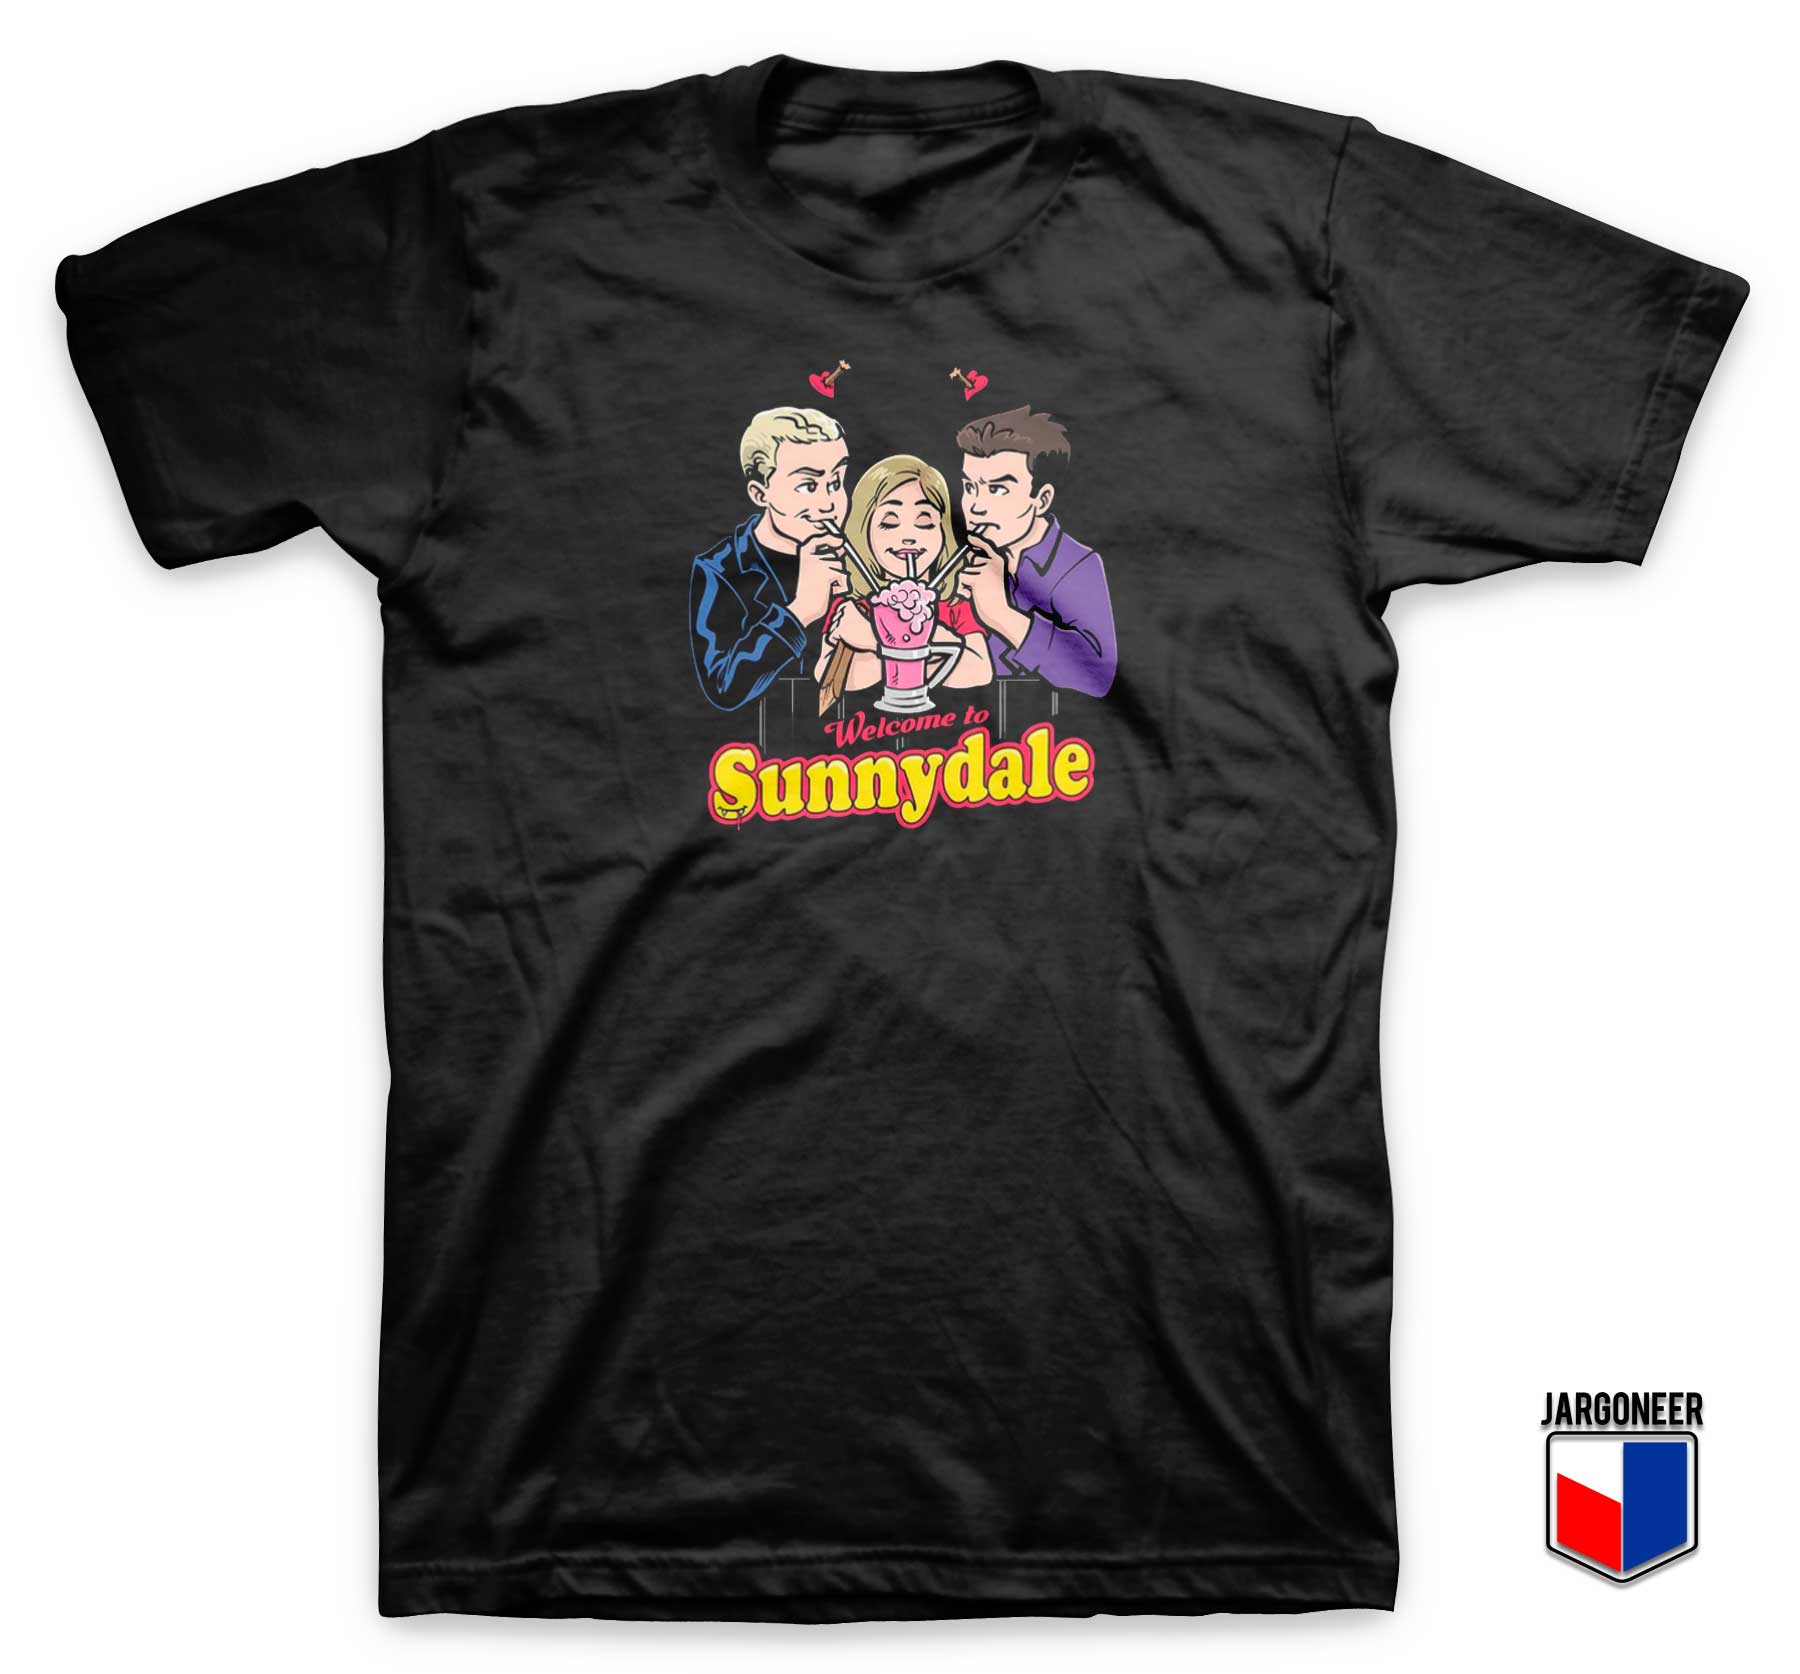 Welcome To Sunnydale T Shirt - Shop Unique Graphic Cool Shirt Designs